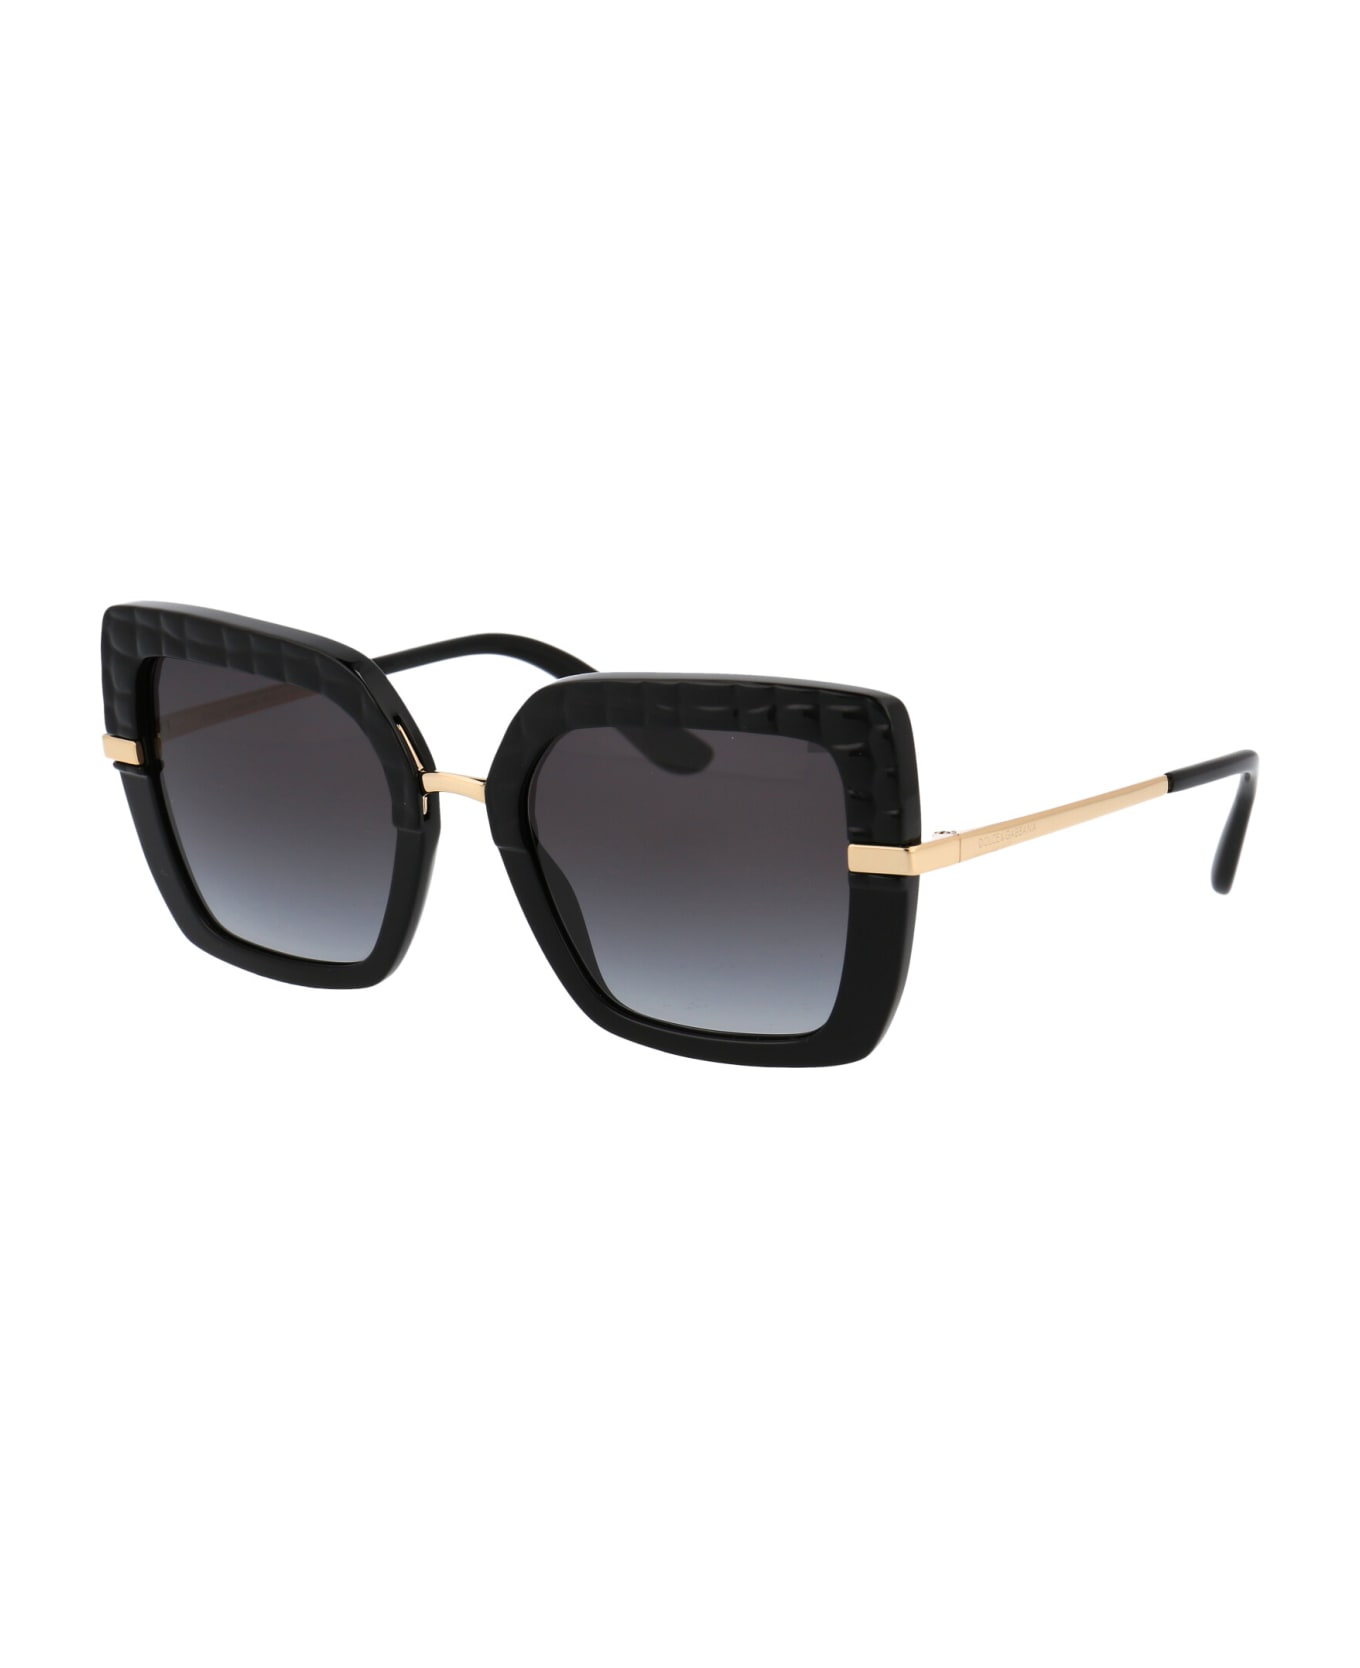 Dolce & Gabbana Eyewear 0dg4373 Sunglasses - 32888G Black Cocco